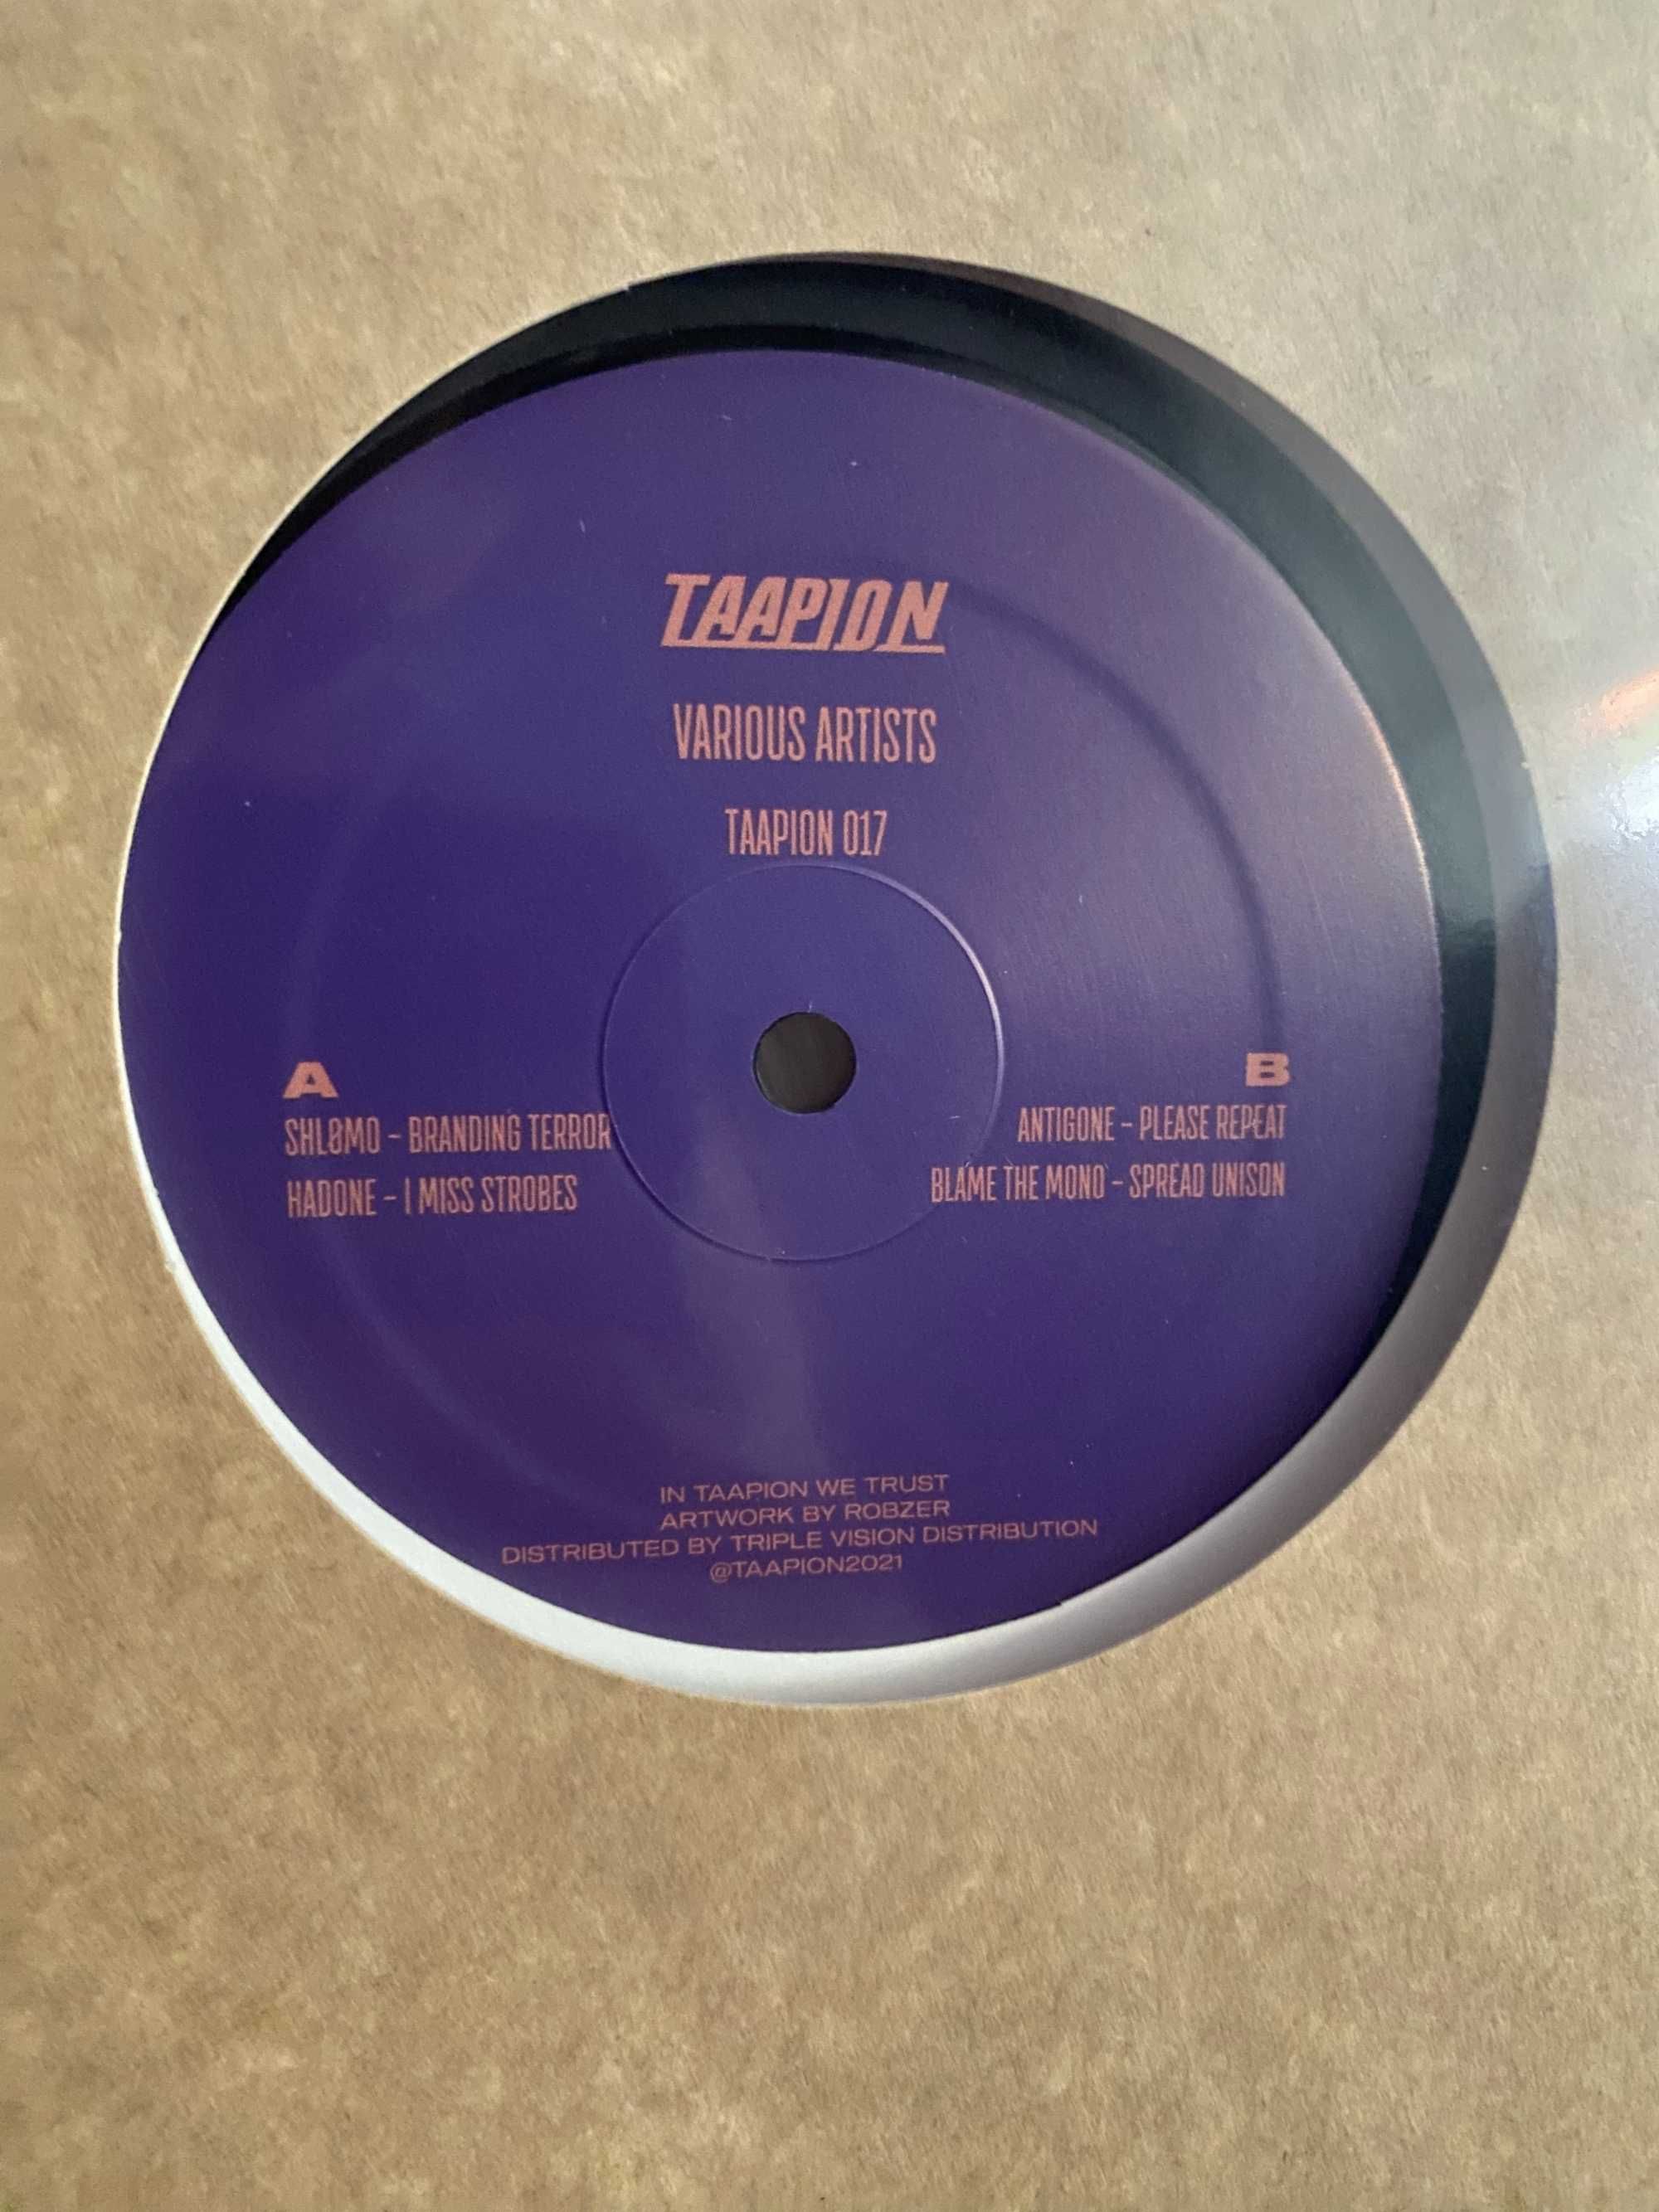 Taapion 017 winyl vinyl Techno Electronic Shlomo hadone